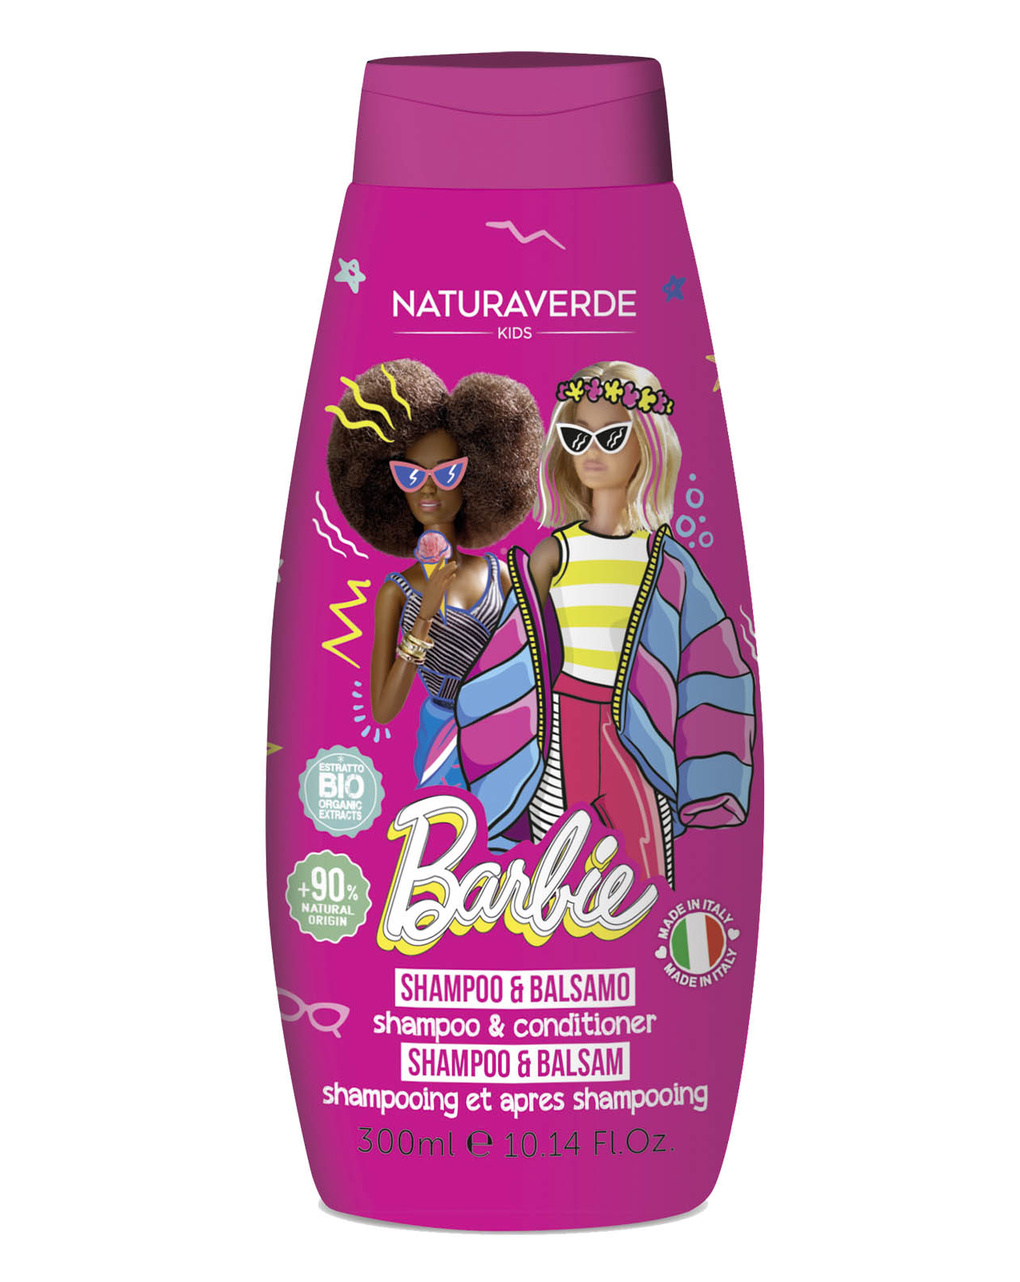 Shampoo&balsamo barbie 300 ml - naturaverde - NaturaVerde